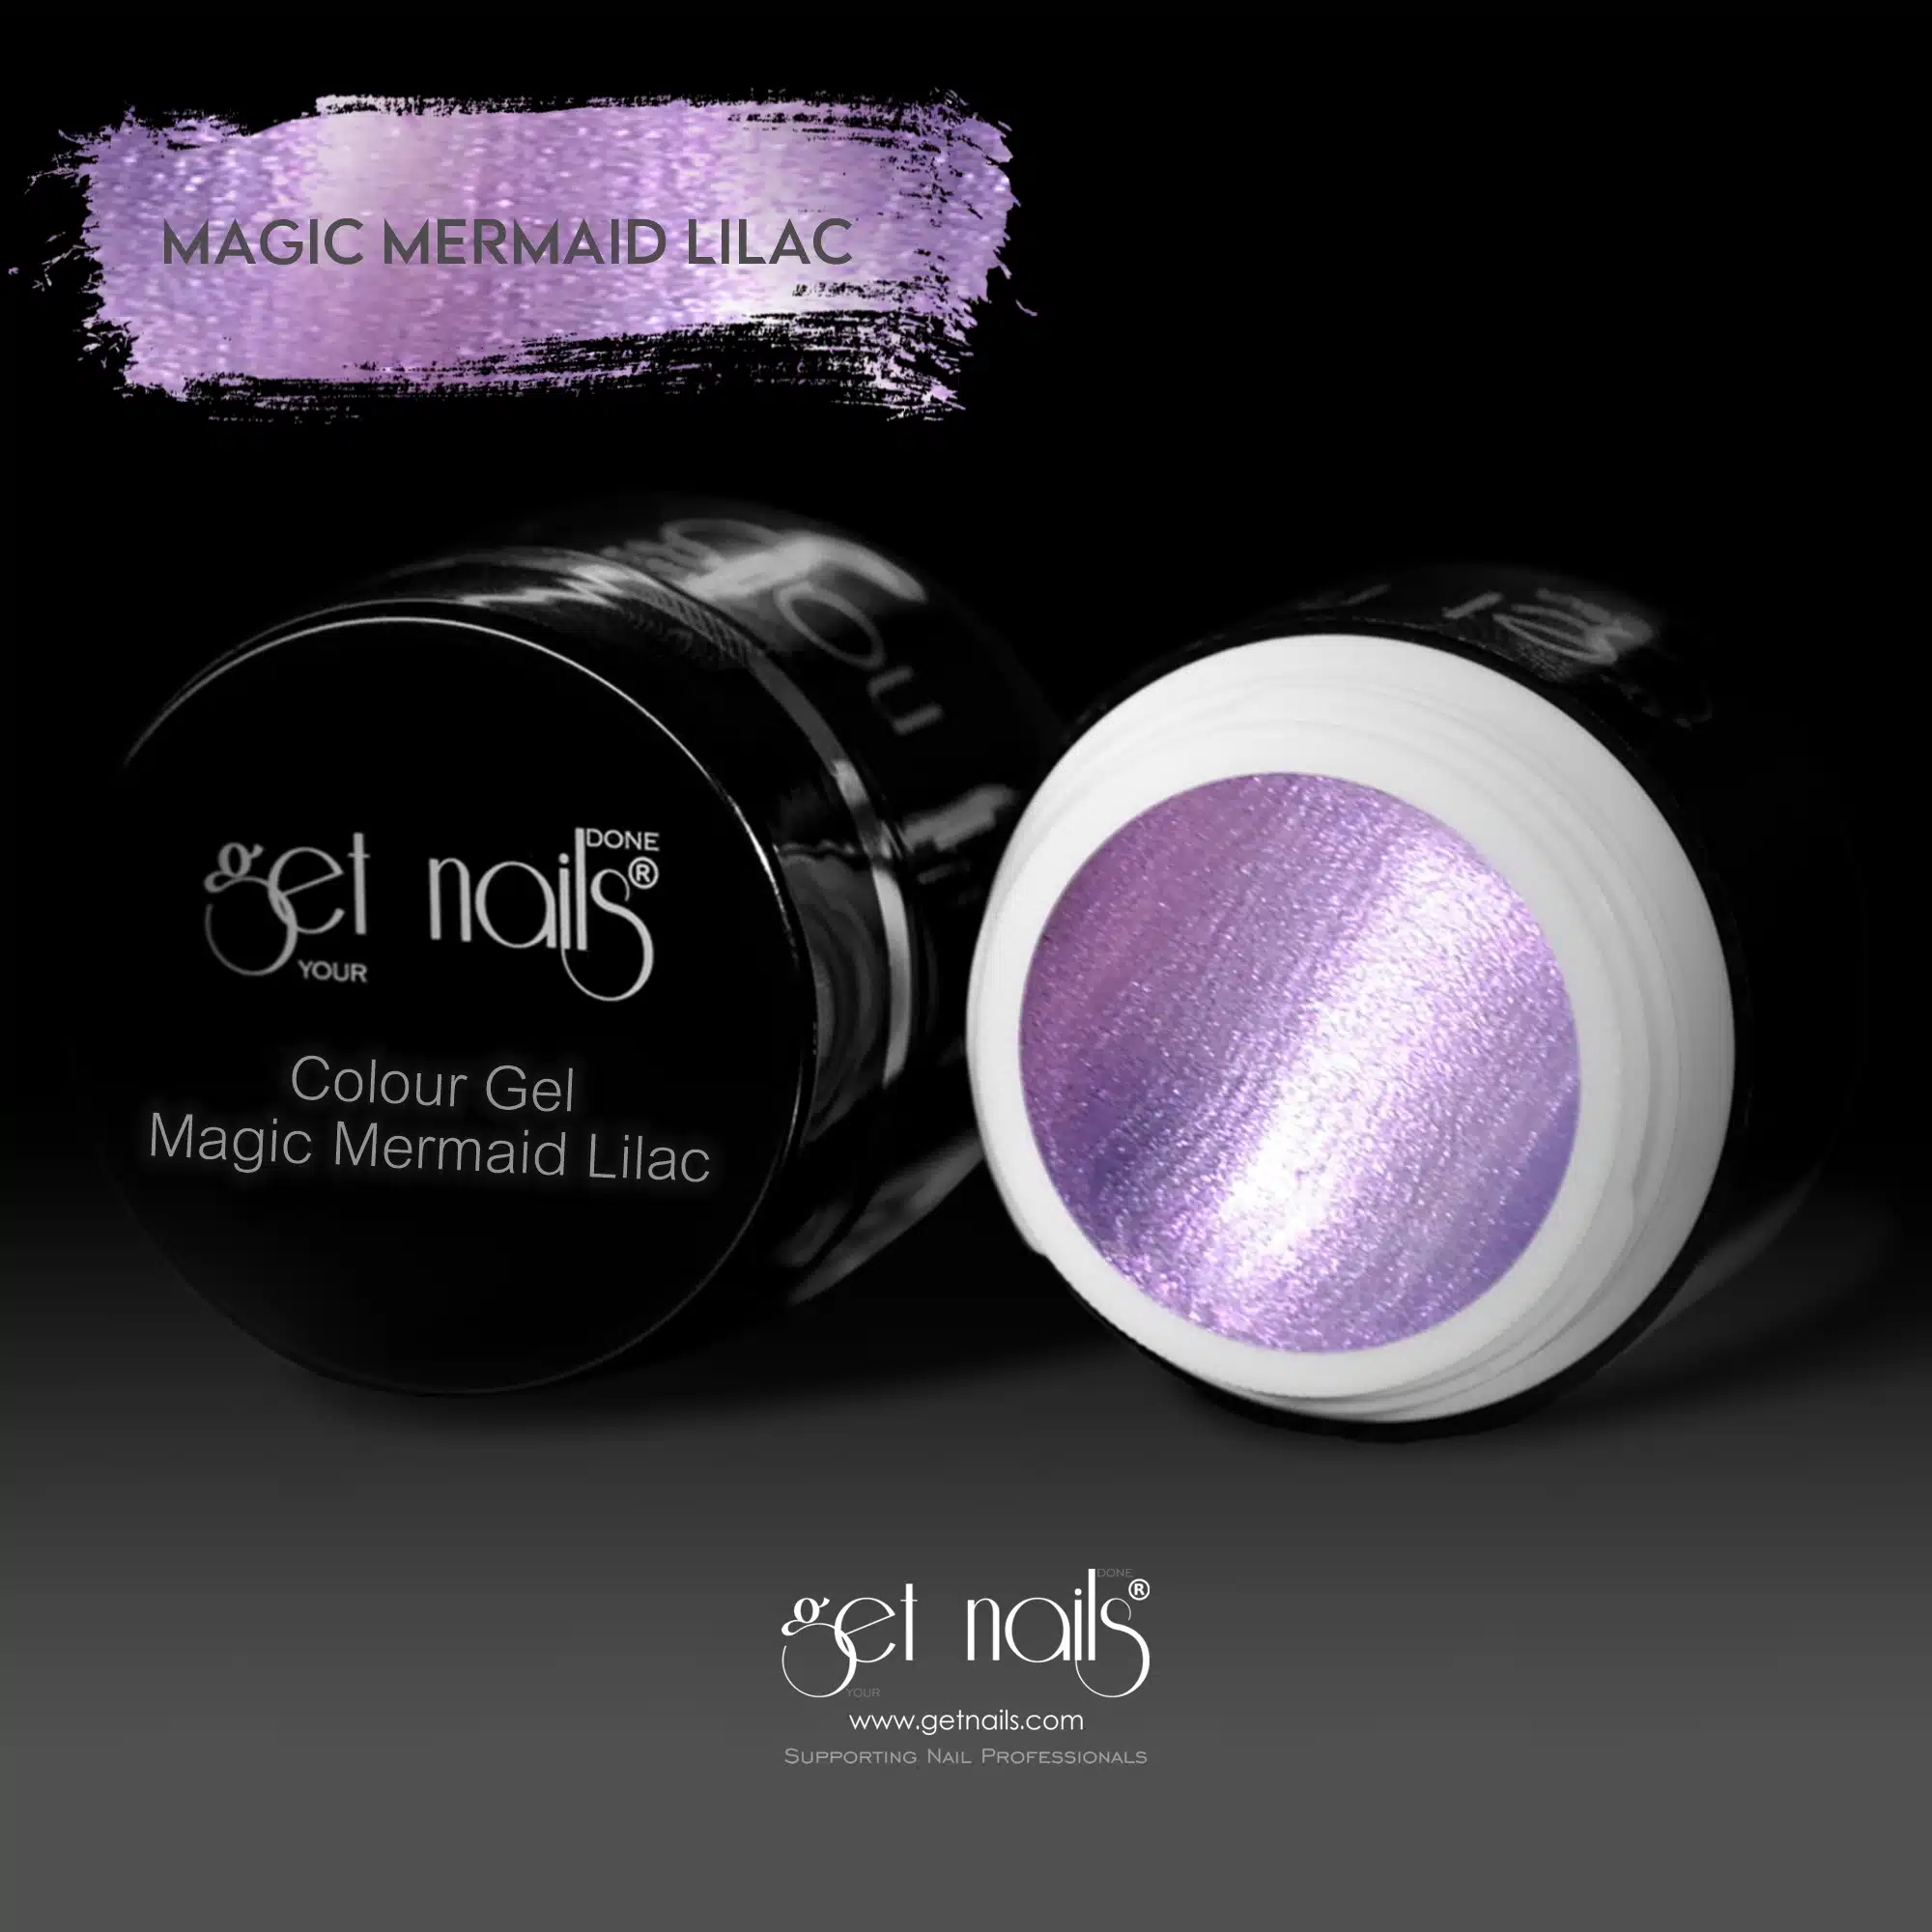 Get Nails Austria - Цветной гель Magic Mermaid Lilac 5g